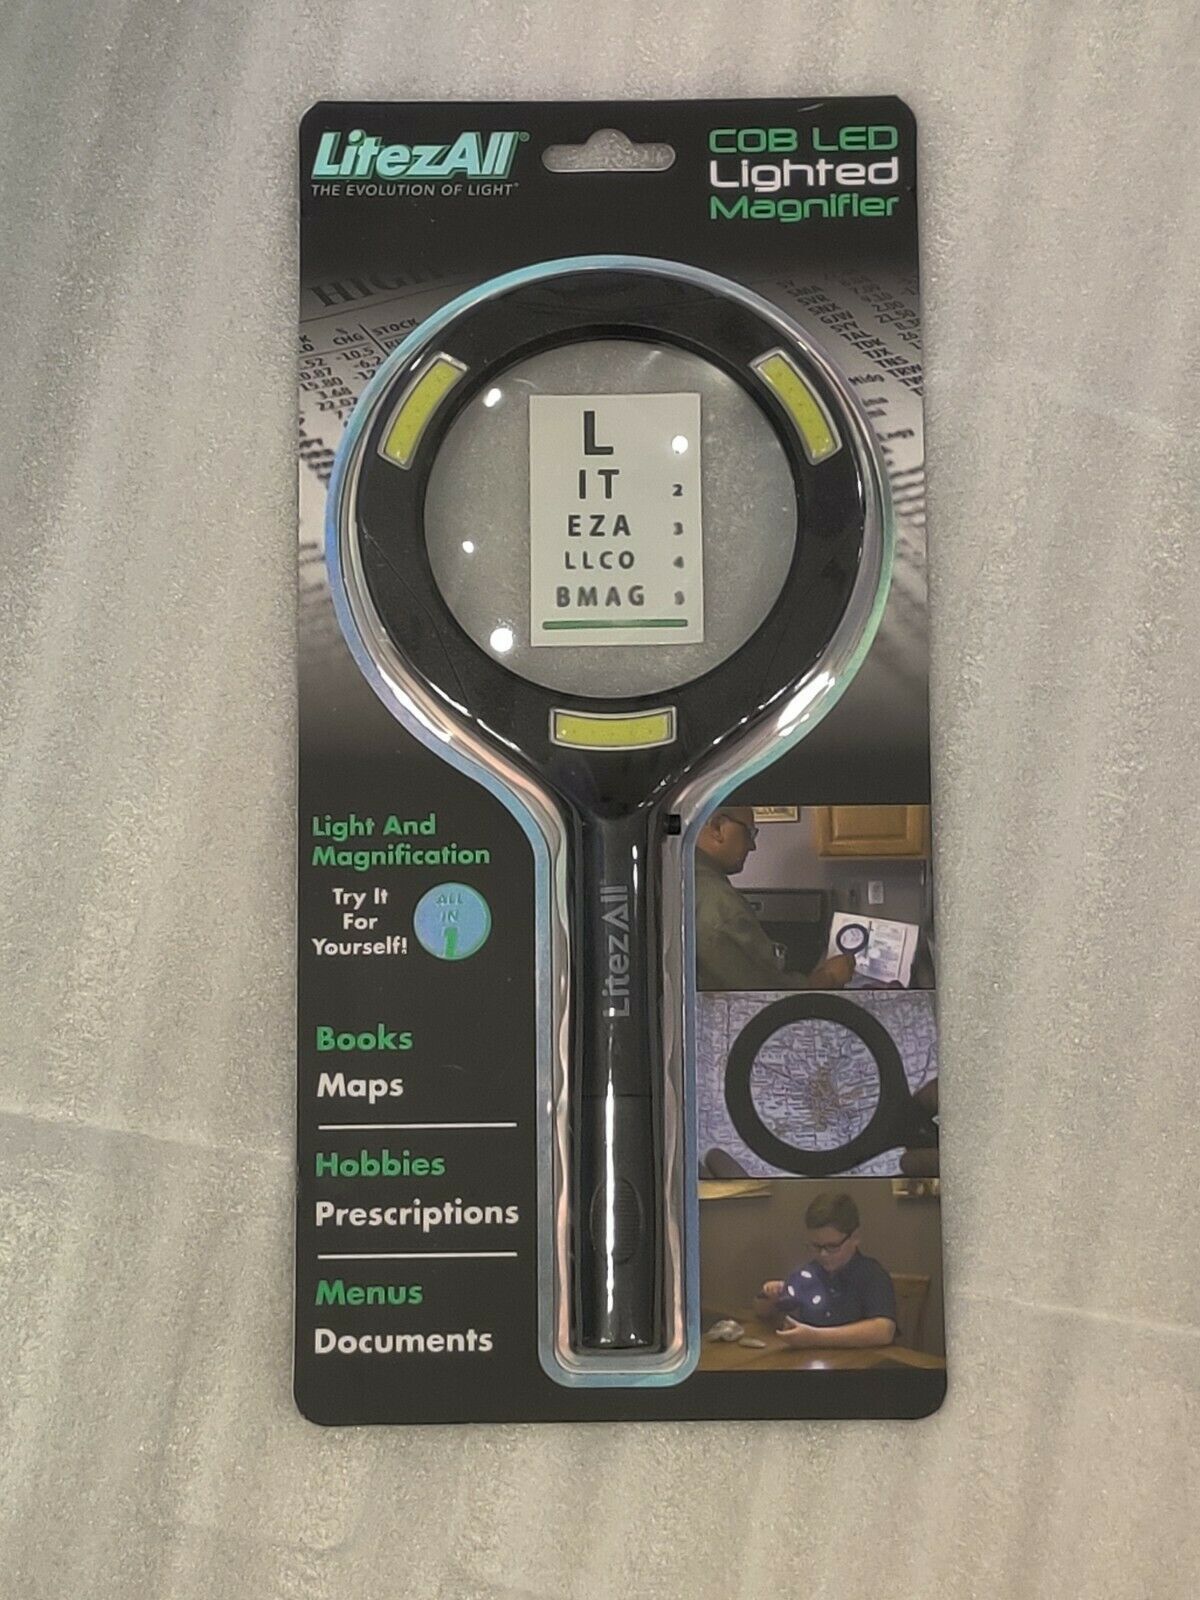 COB LED Lighted Magnifier